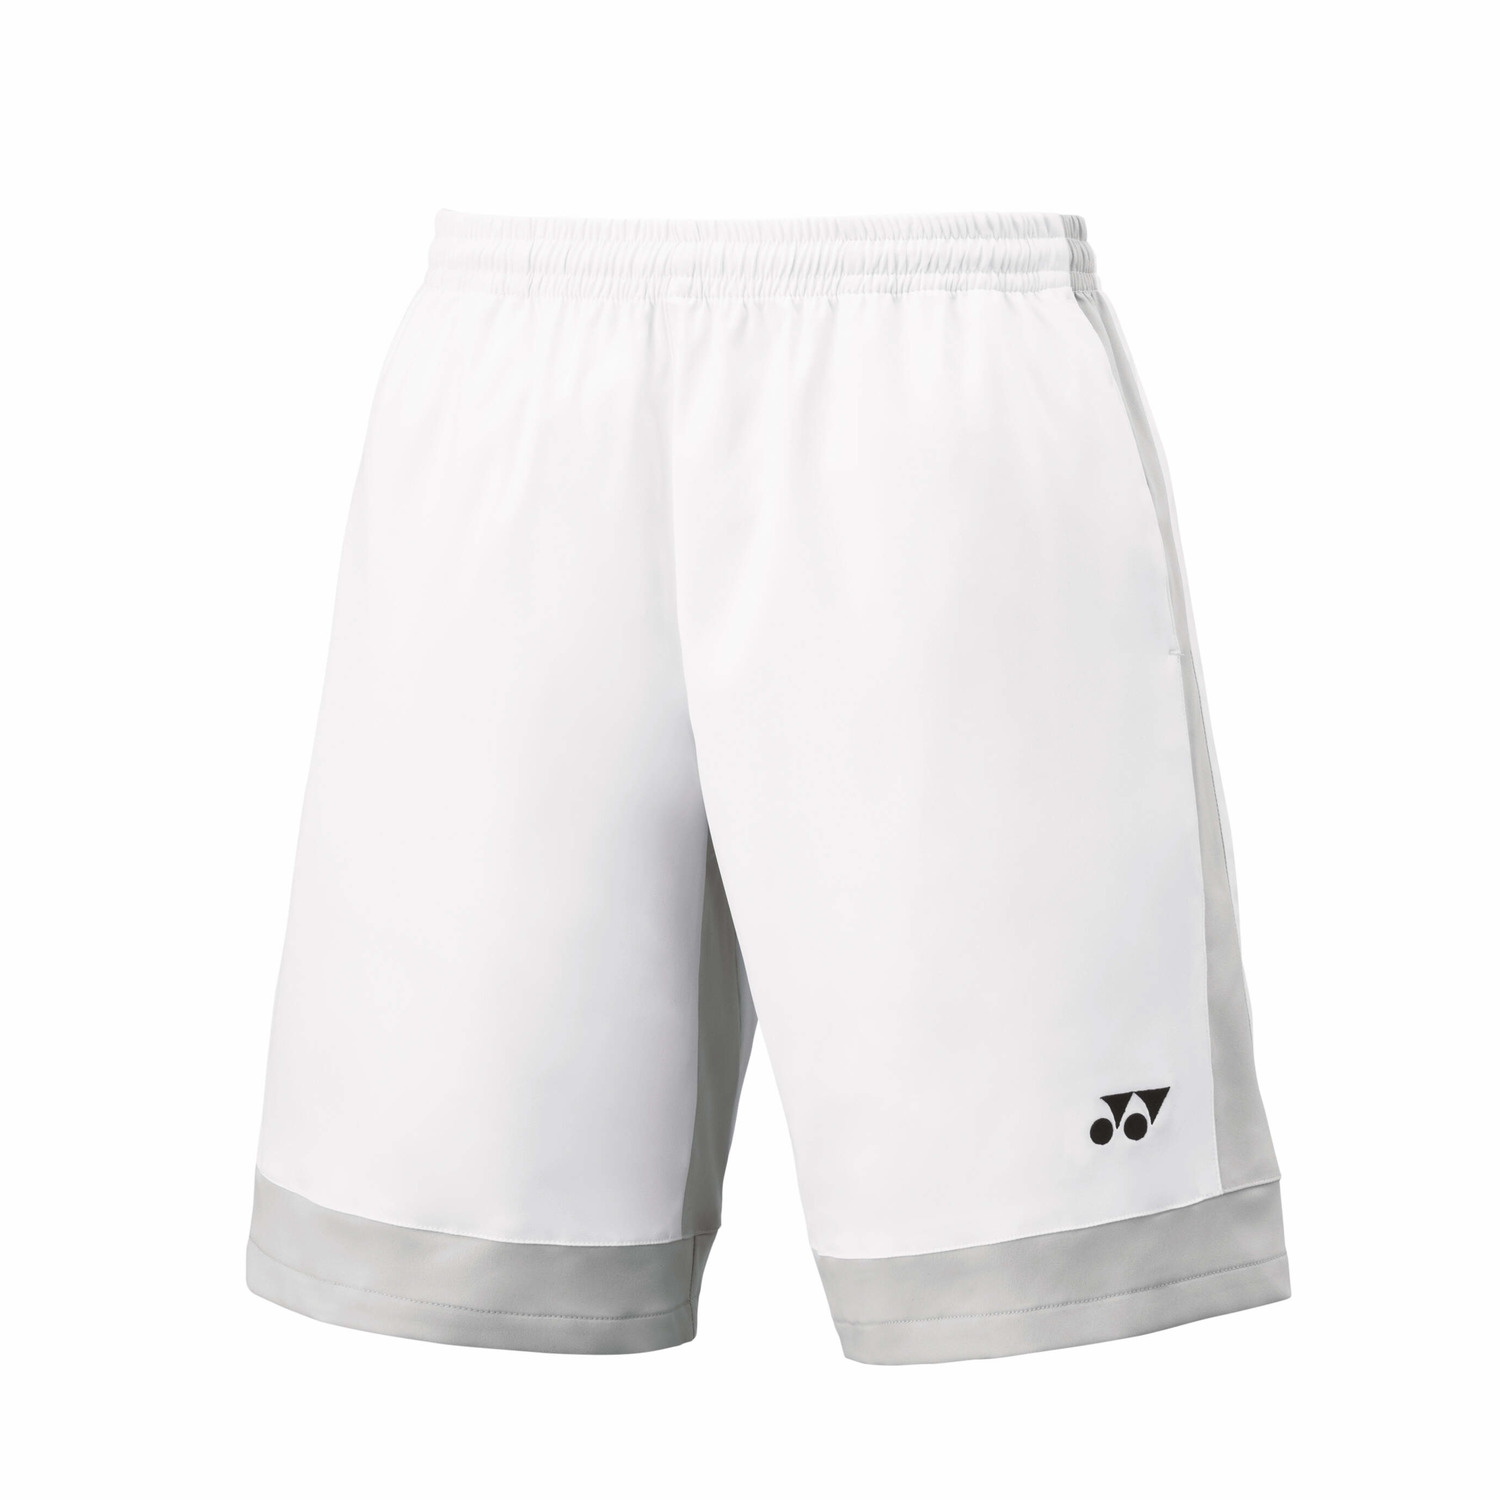 Yonex Badminton/ Sports Shorts 15144 White (Made in Japan) MEN'S